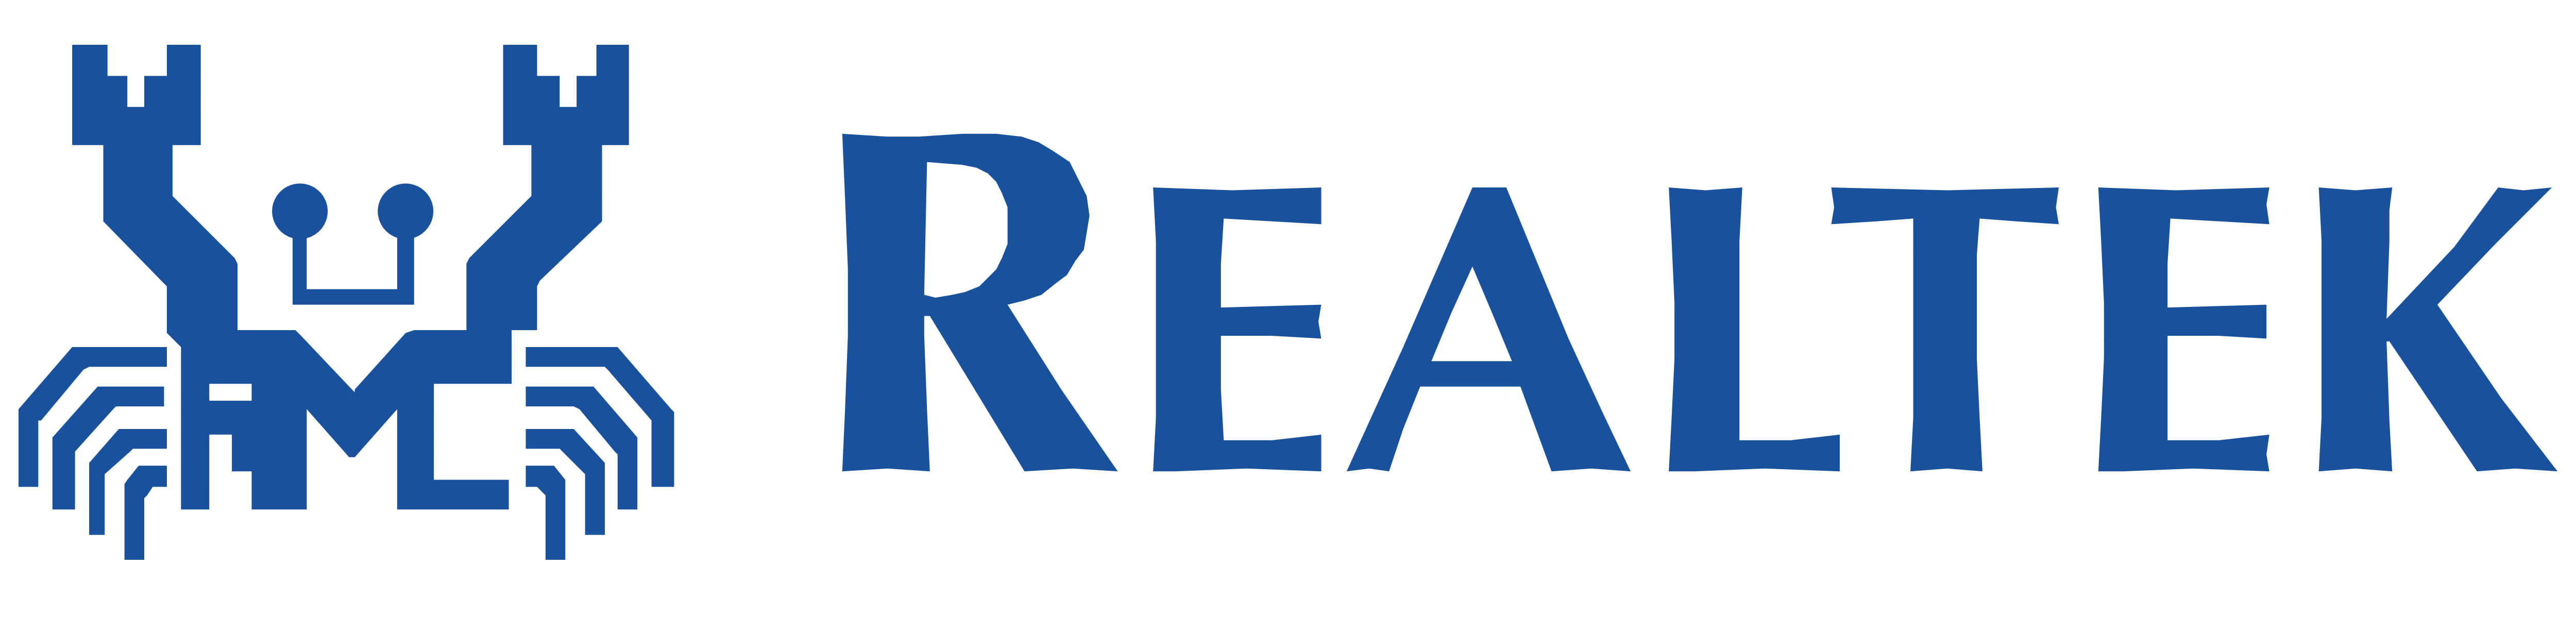 Realtek logo